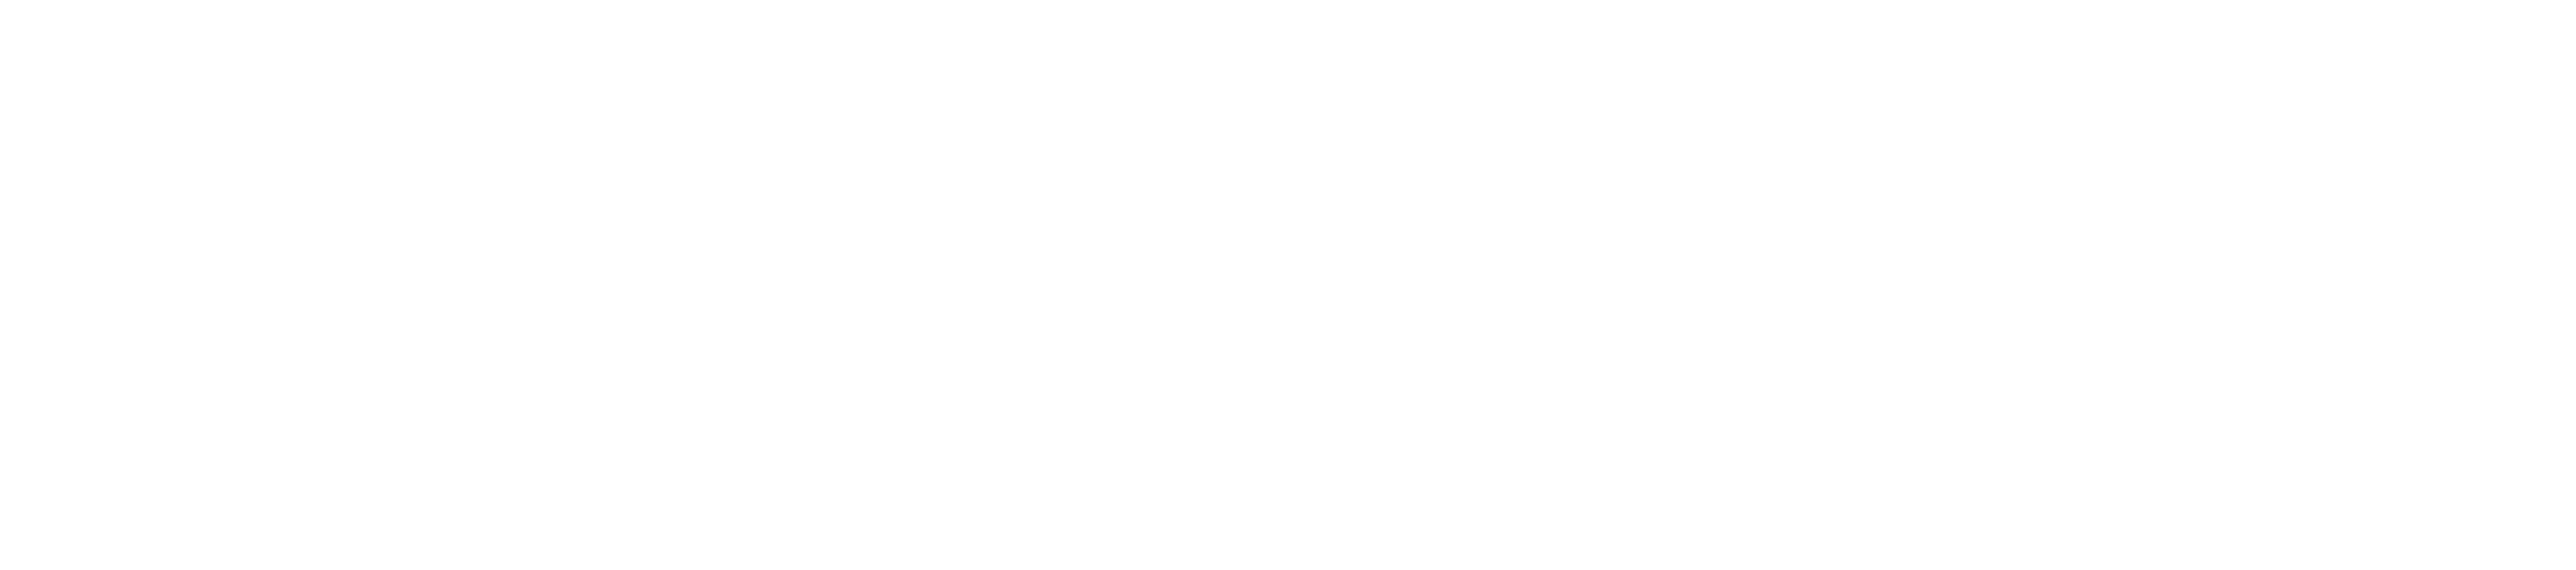 cc magazine Logo